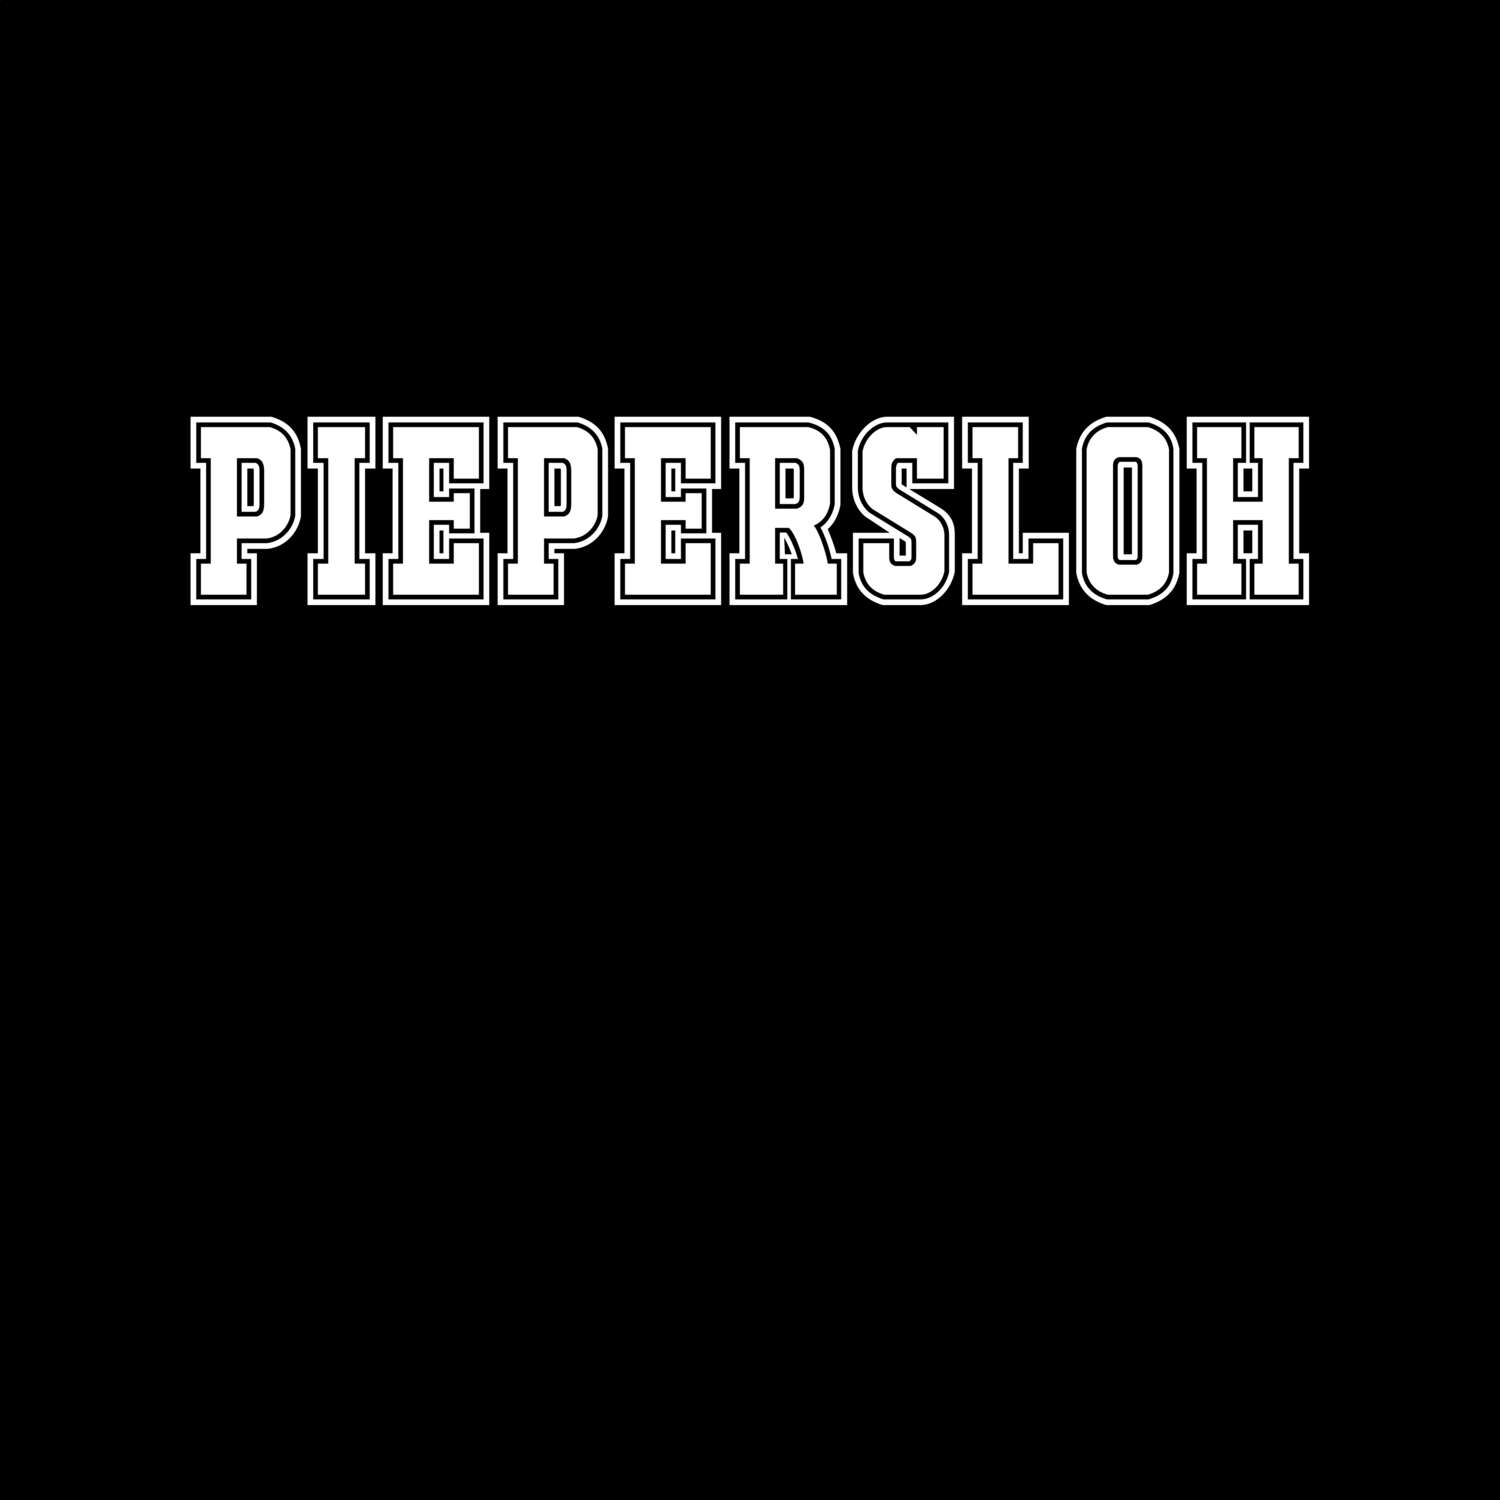 Piepersloh T-Shirt »Classic«